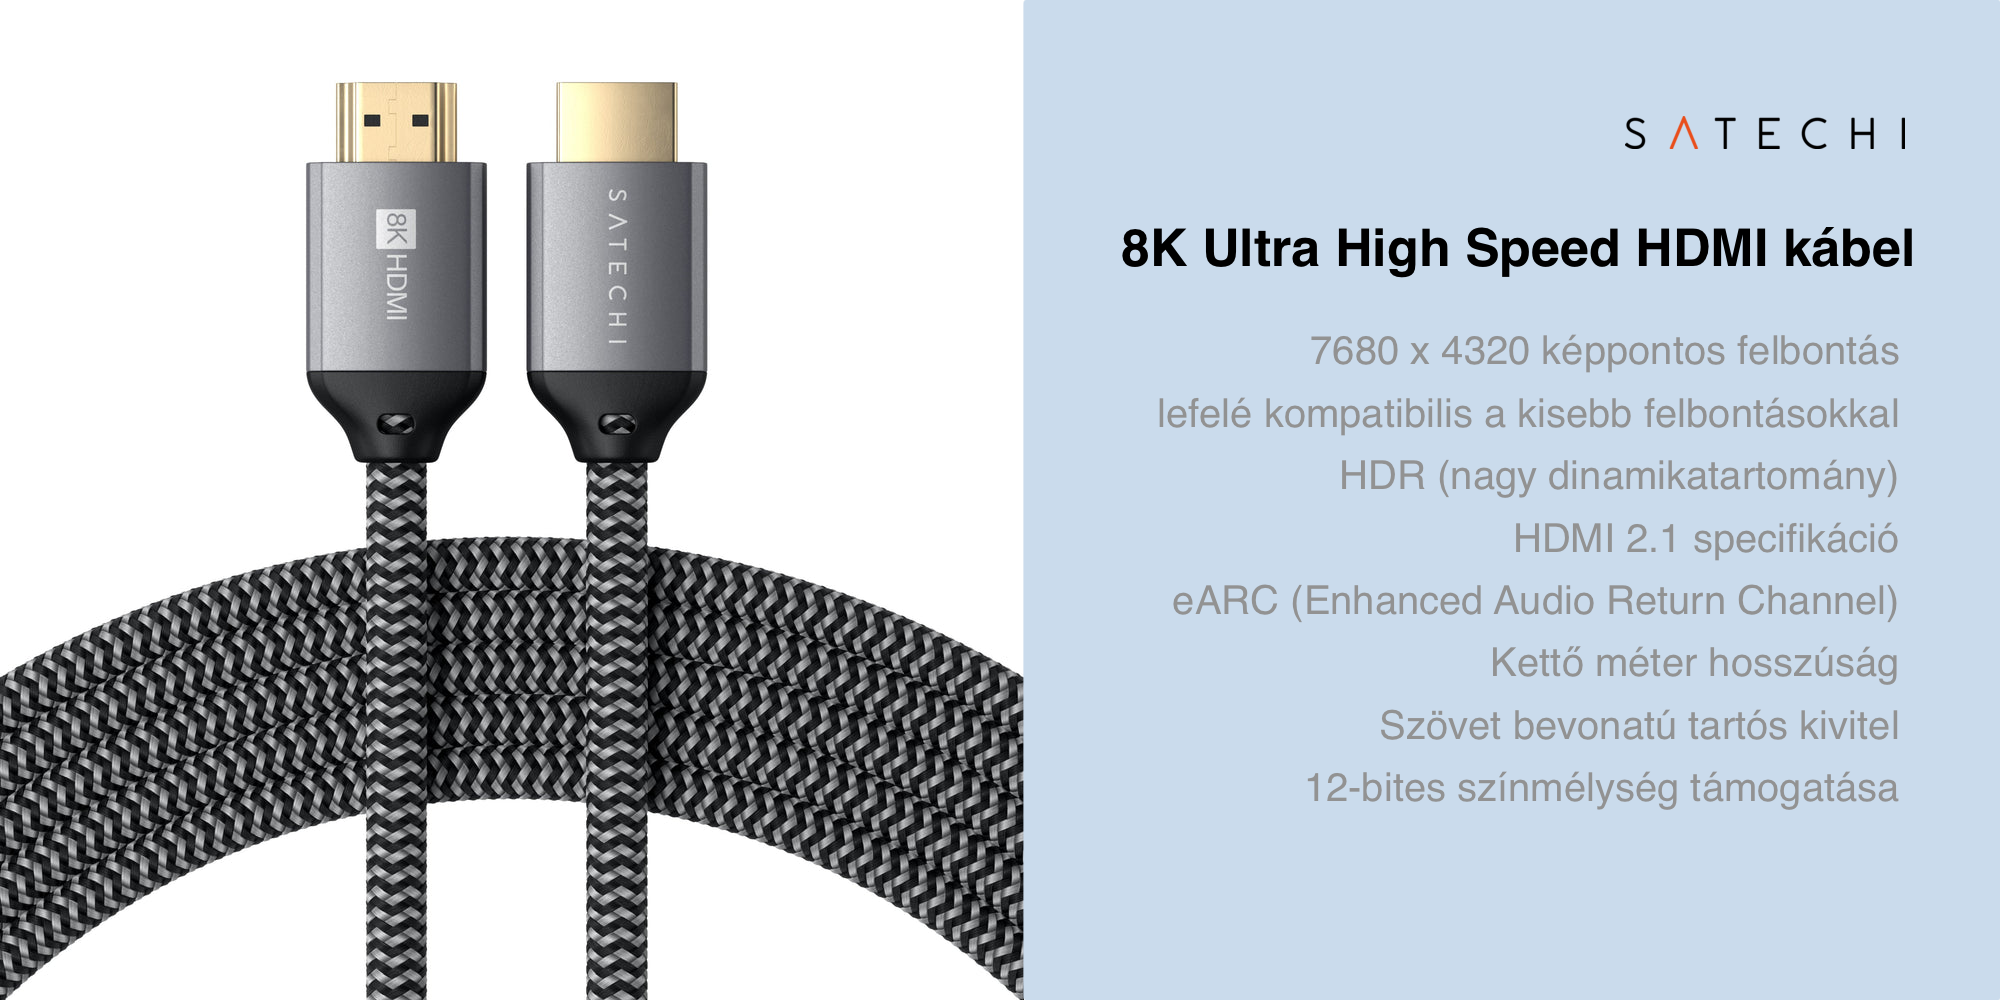 Satechi 8K Ultra High Speed HDMI kábel